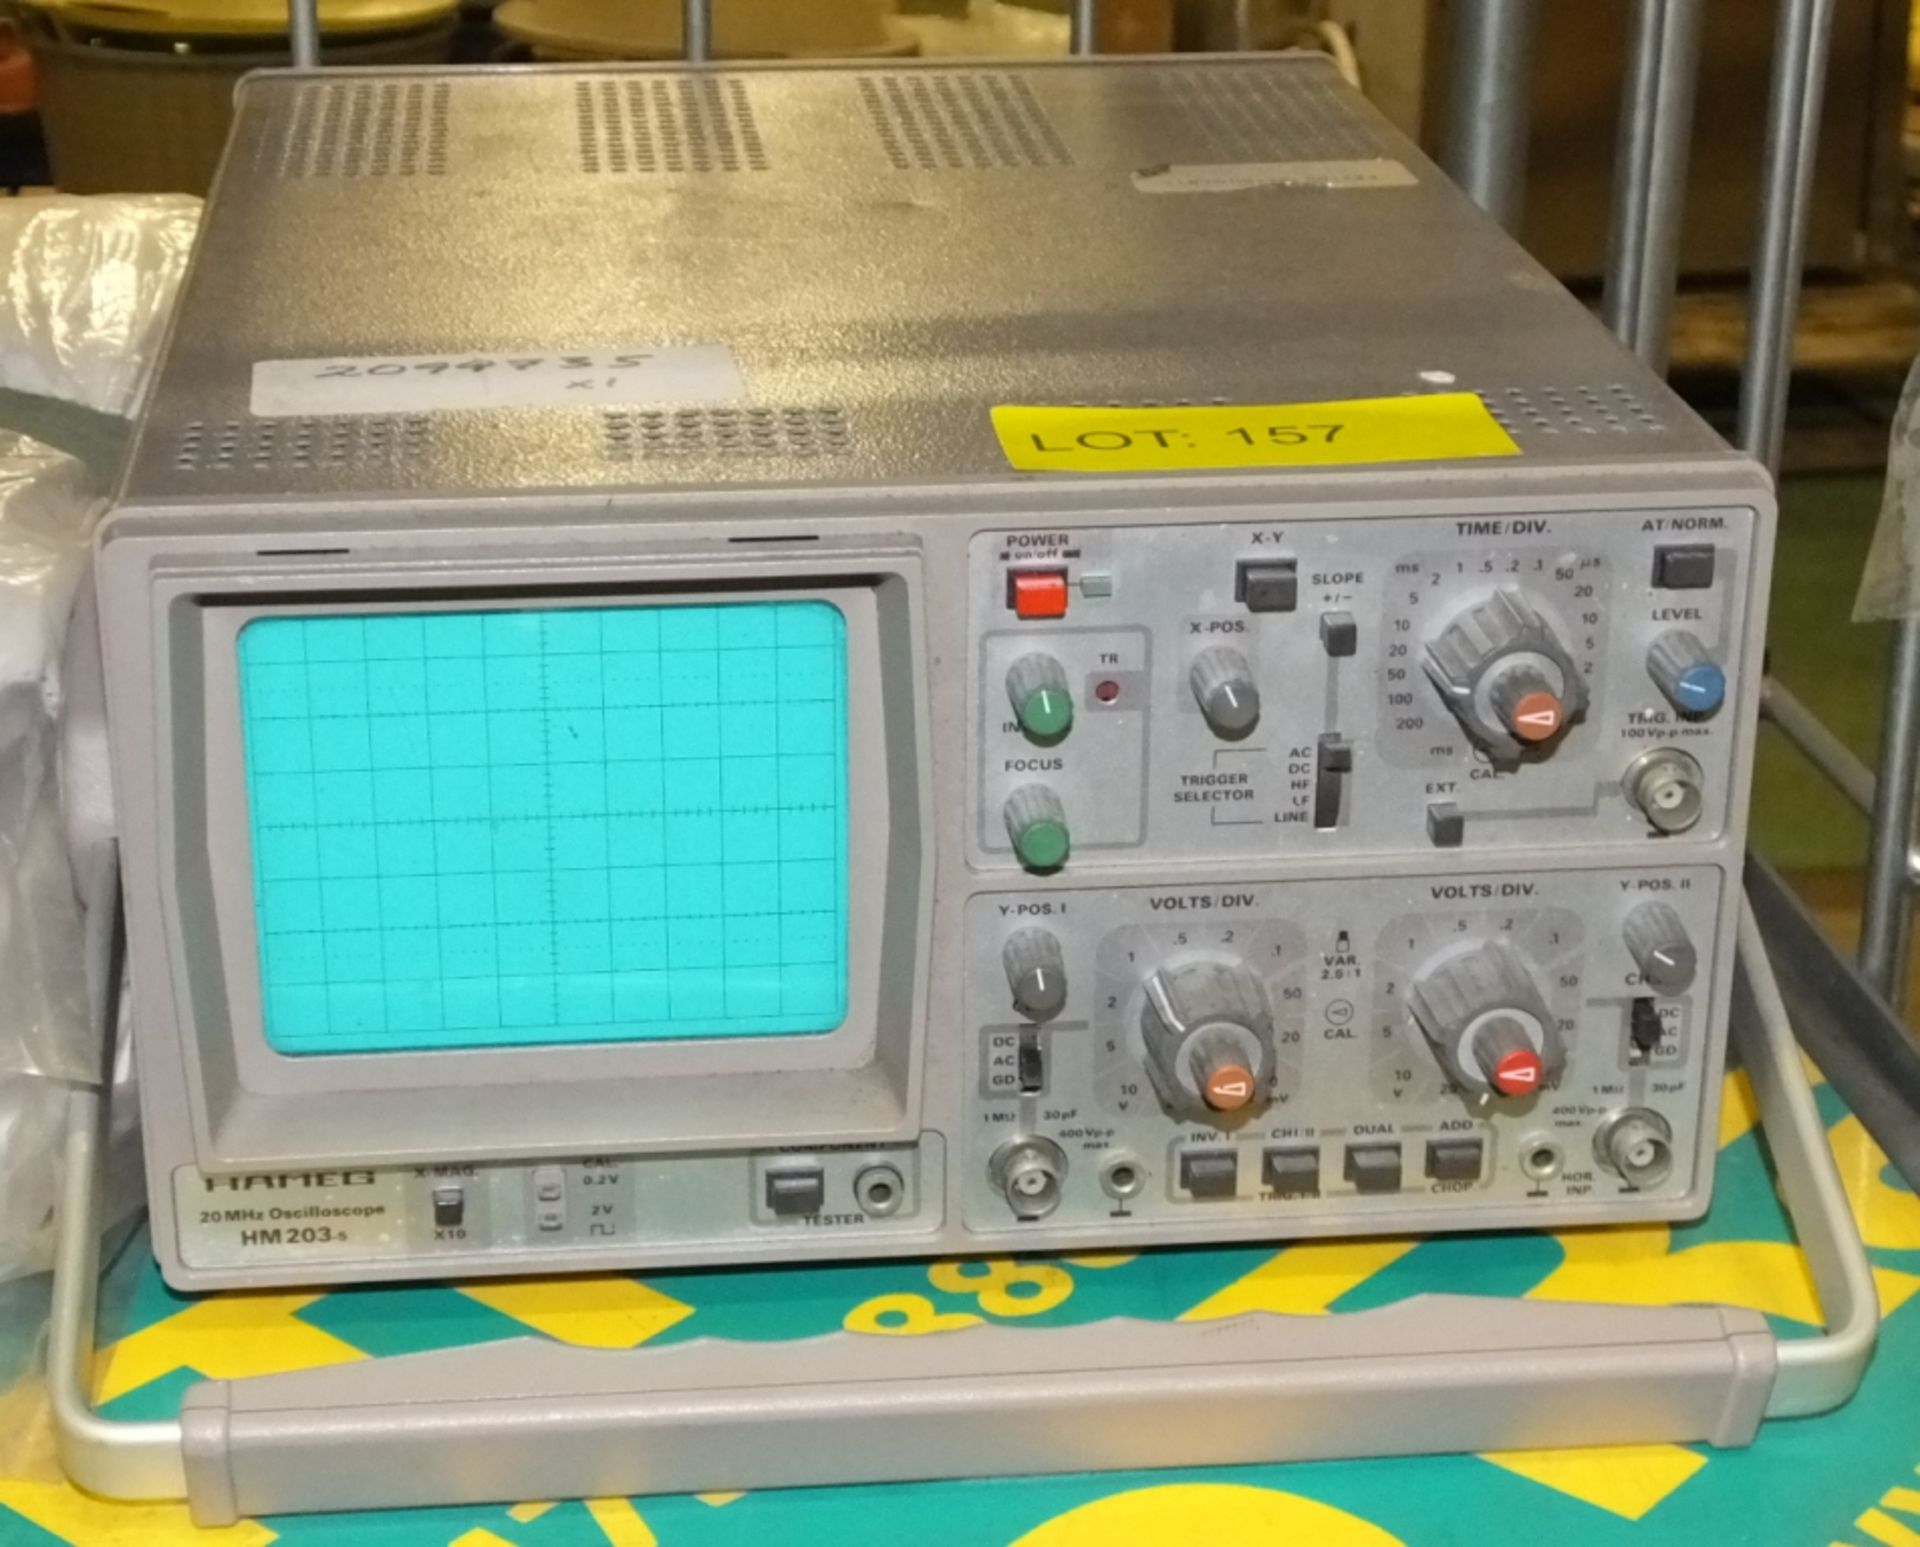 Hameg HM 203-5 20 Mhz Oscilloscope